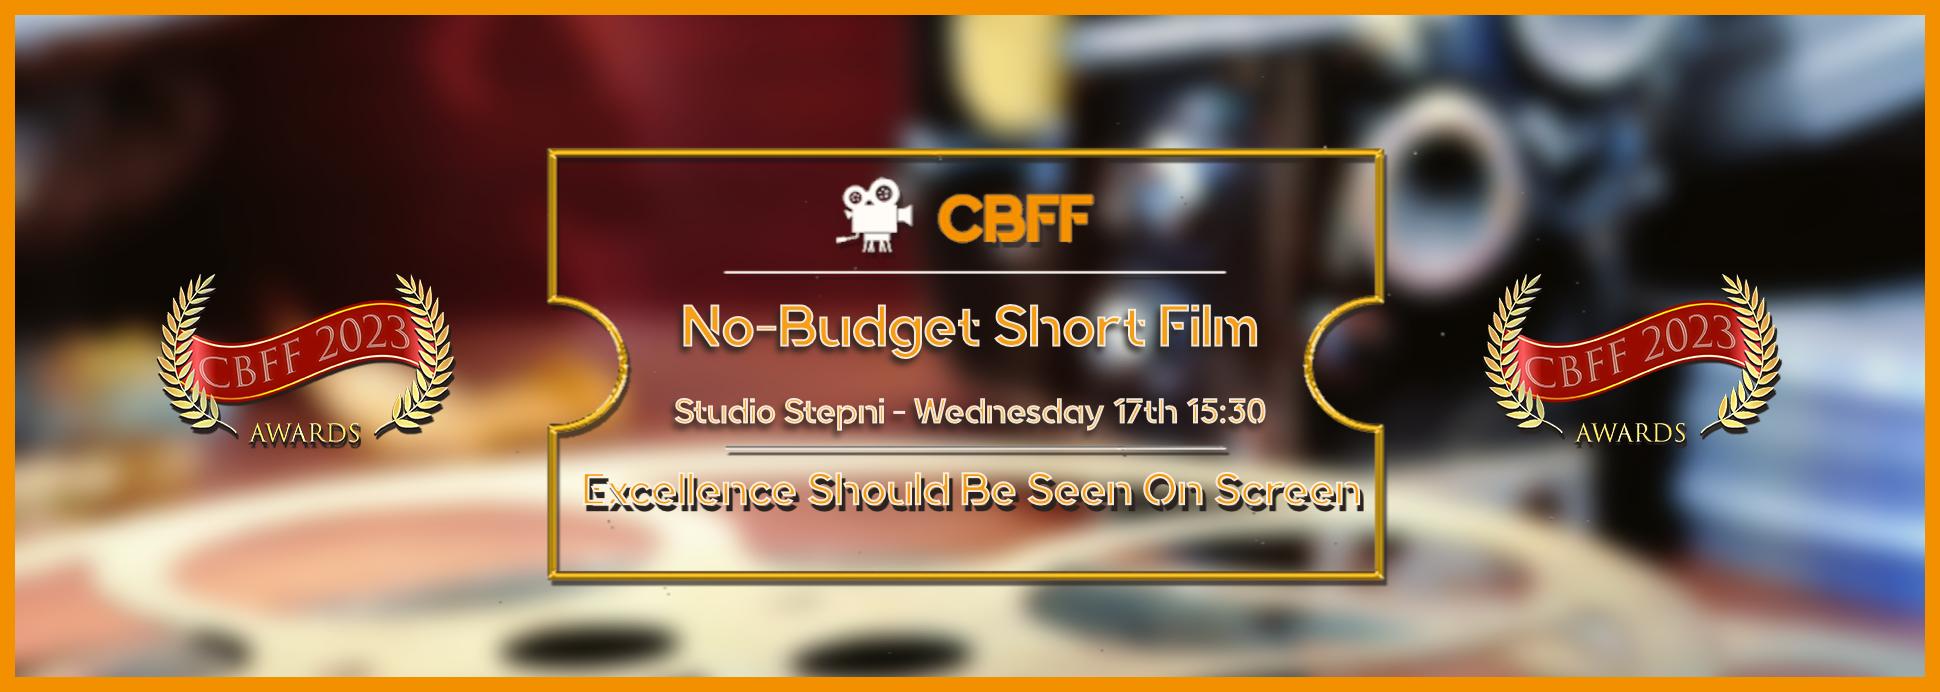 Studio Stepni - No-Budget Short Film 17th 15:30